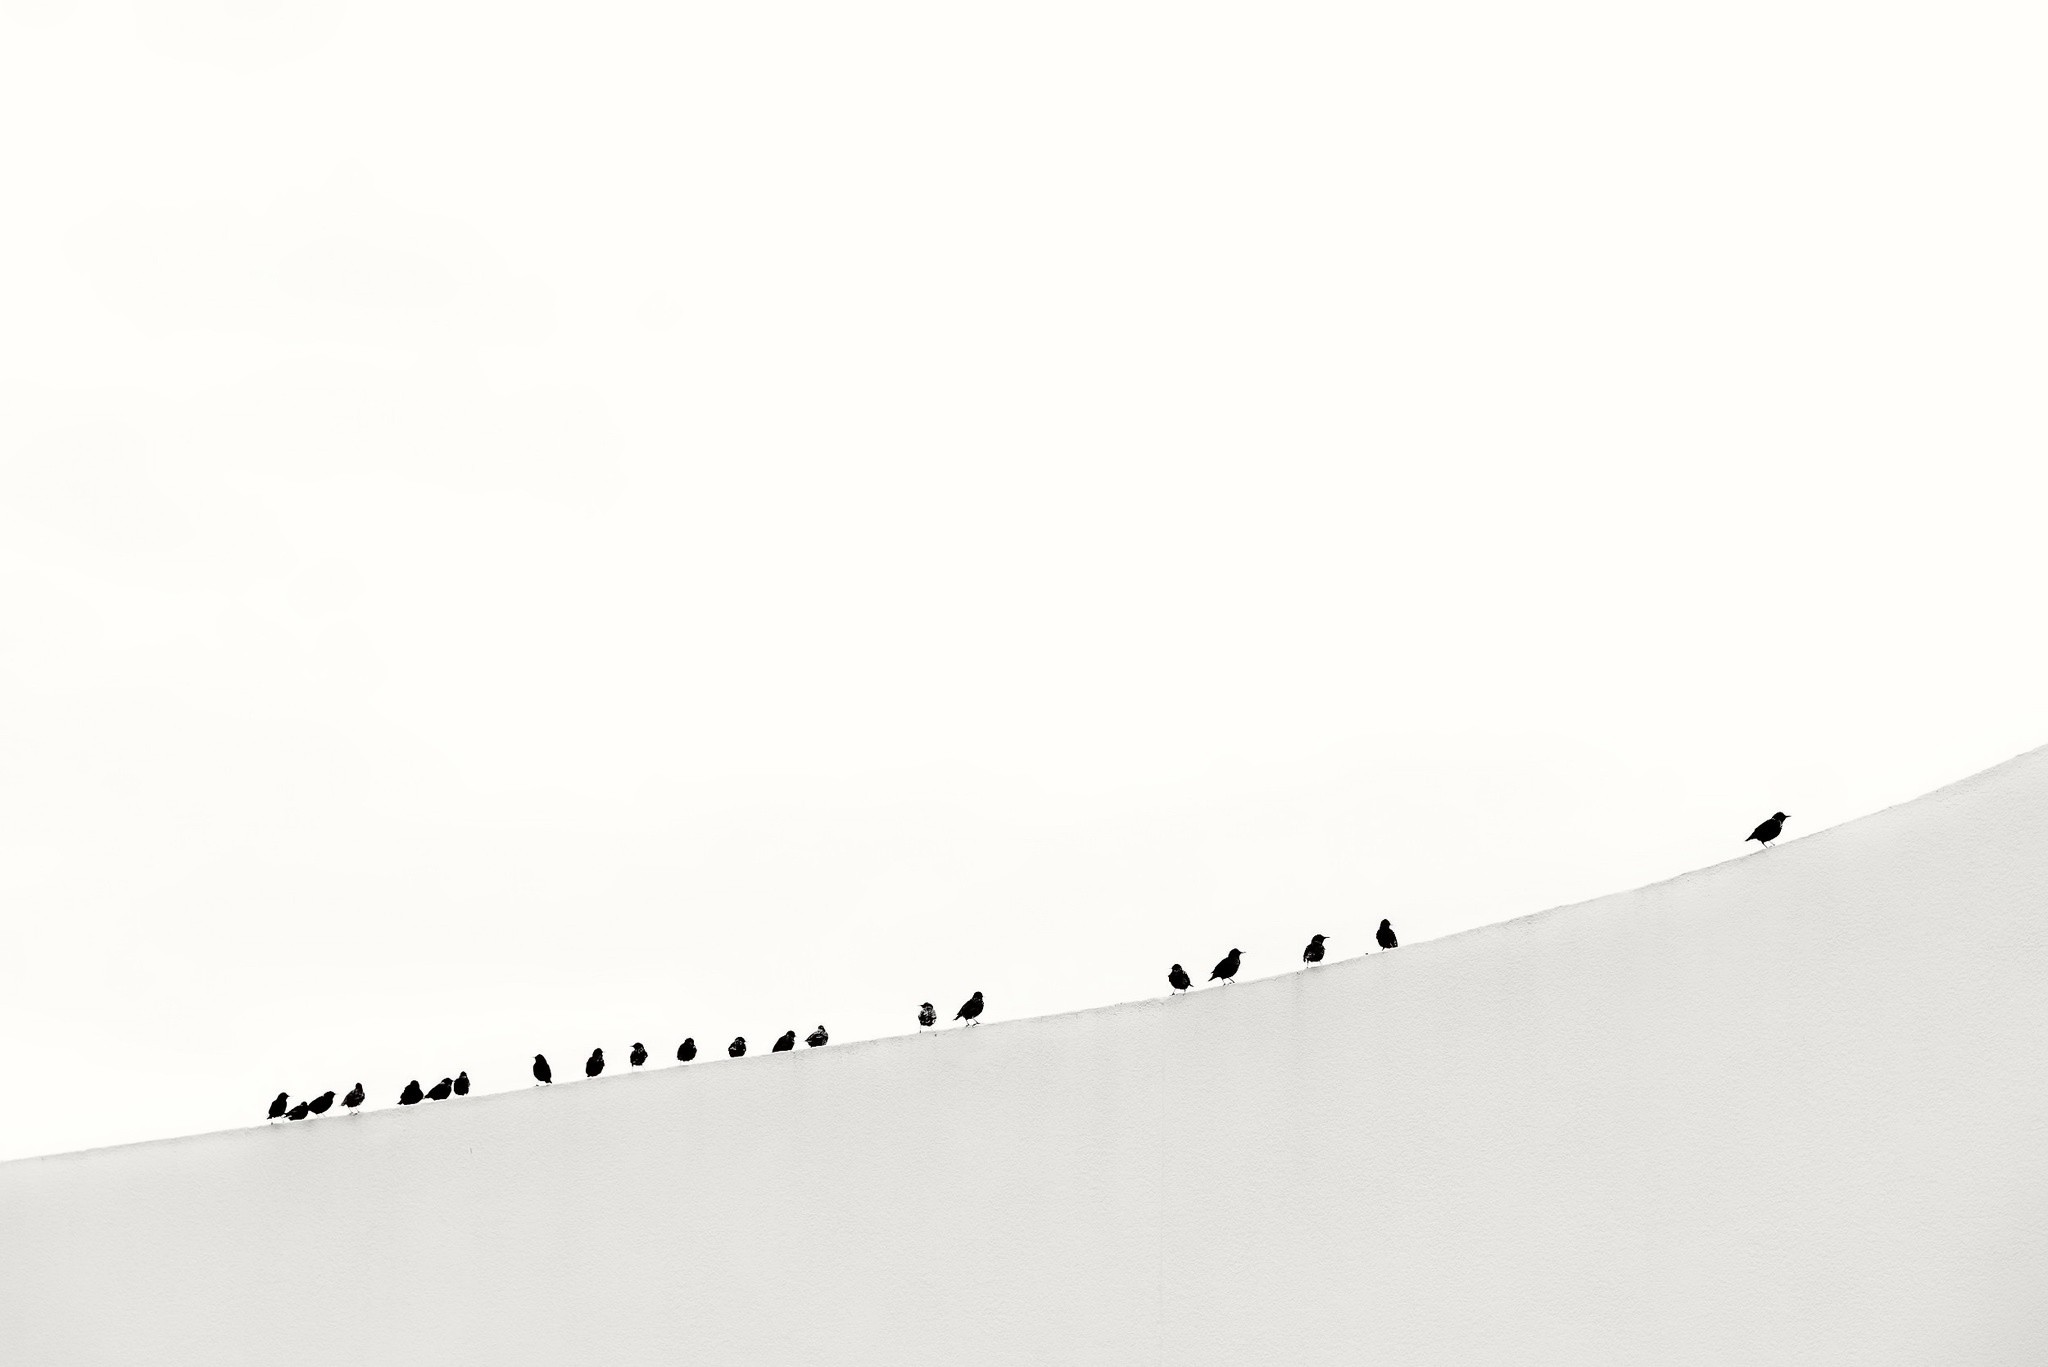 General 2048x1367 minimalism animals birds